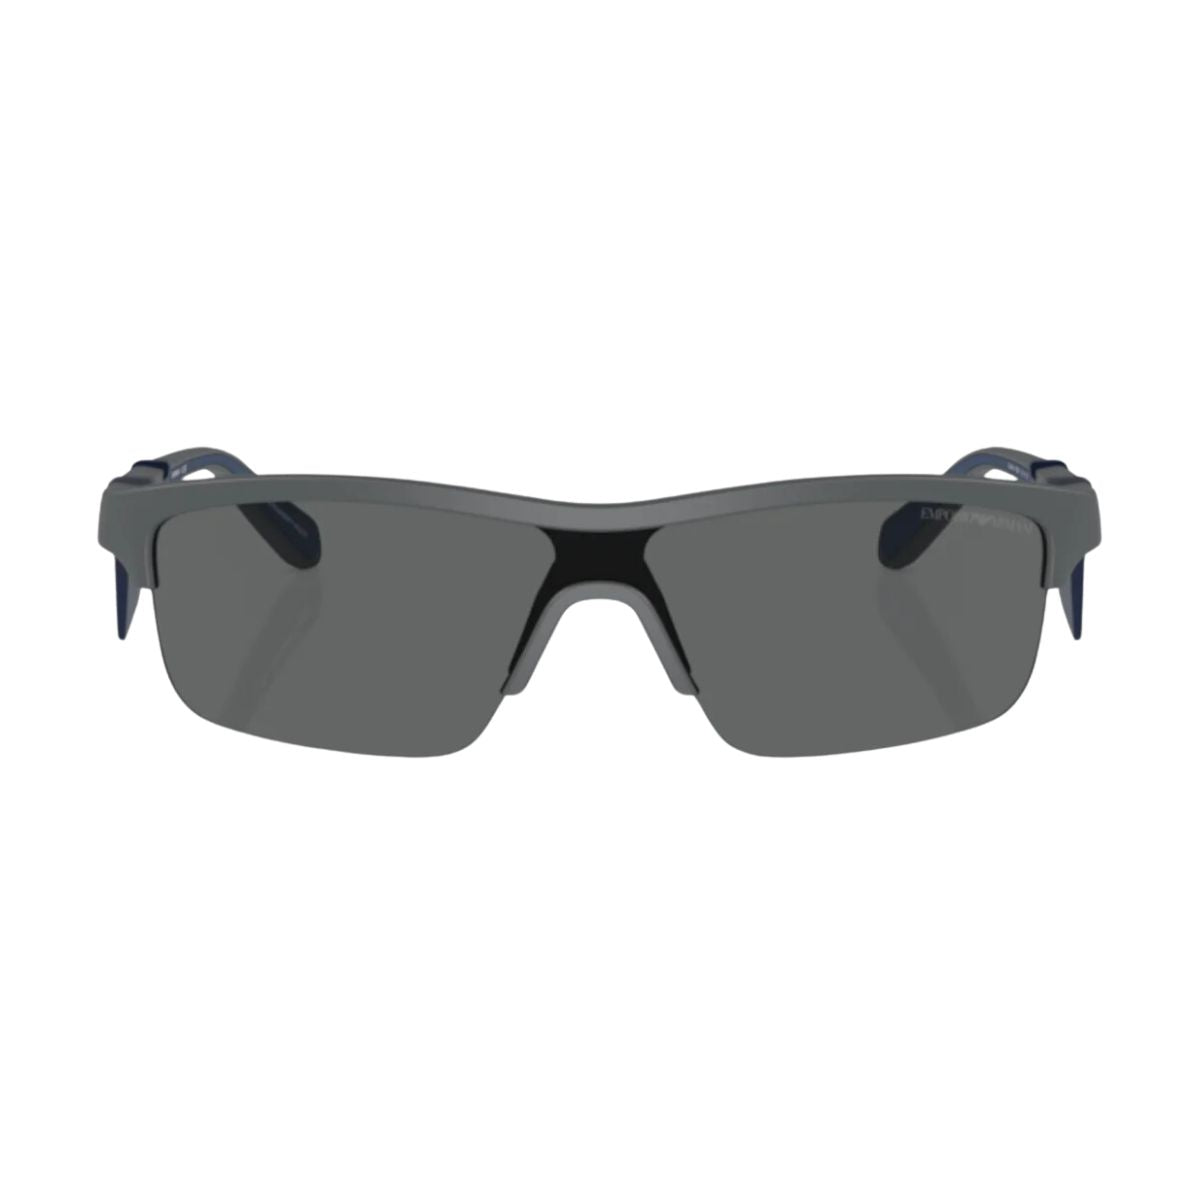 "Stylish Emporio Armani Sunglasses For Men's | Optorium"